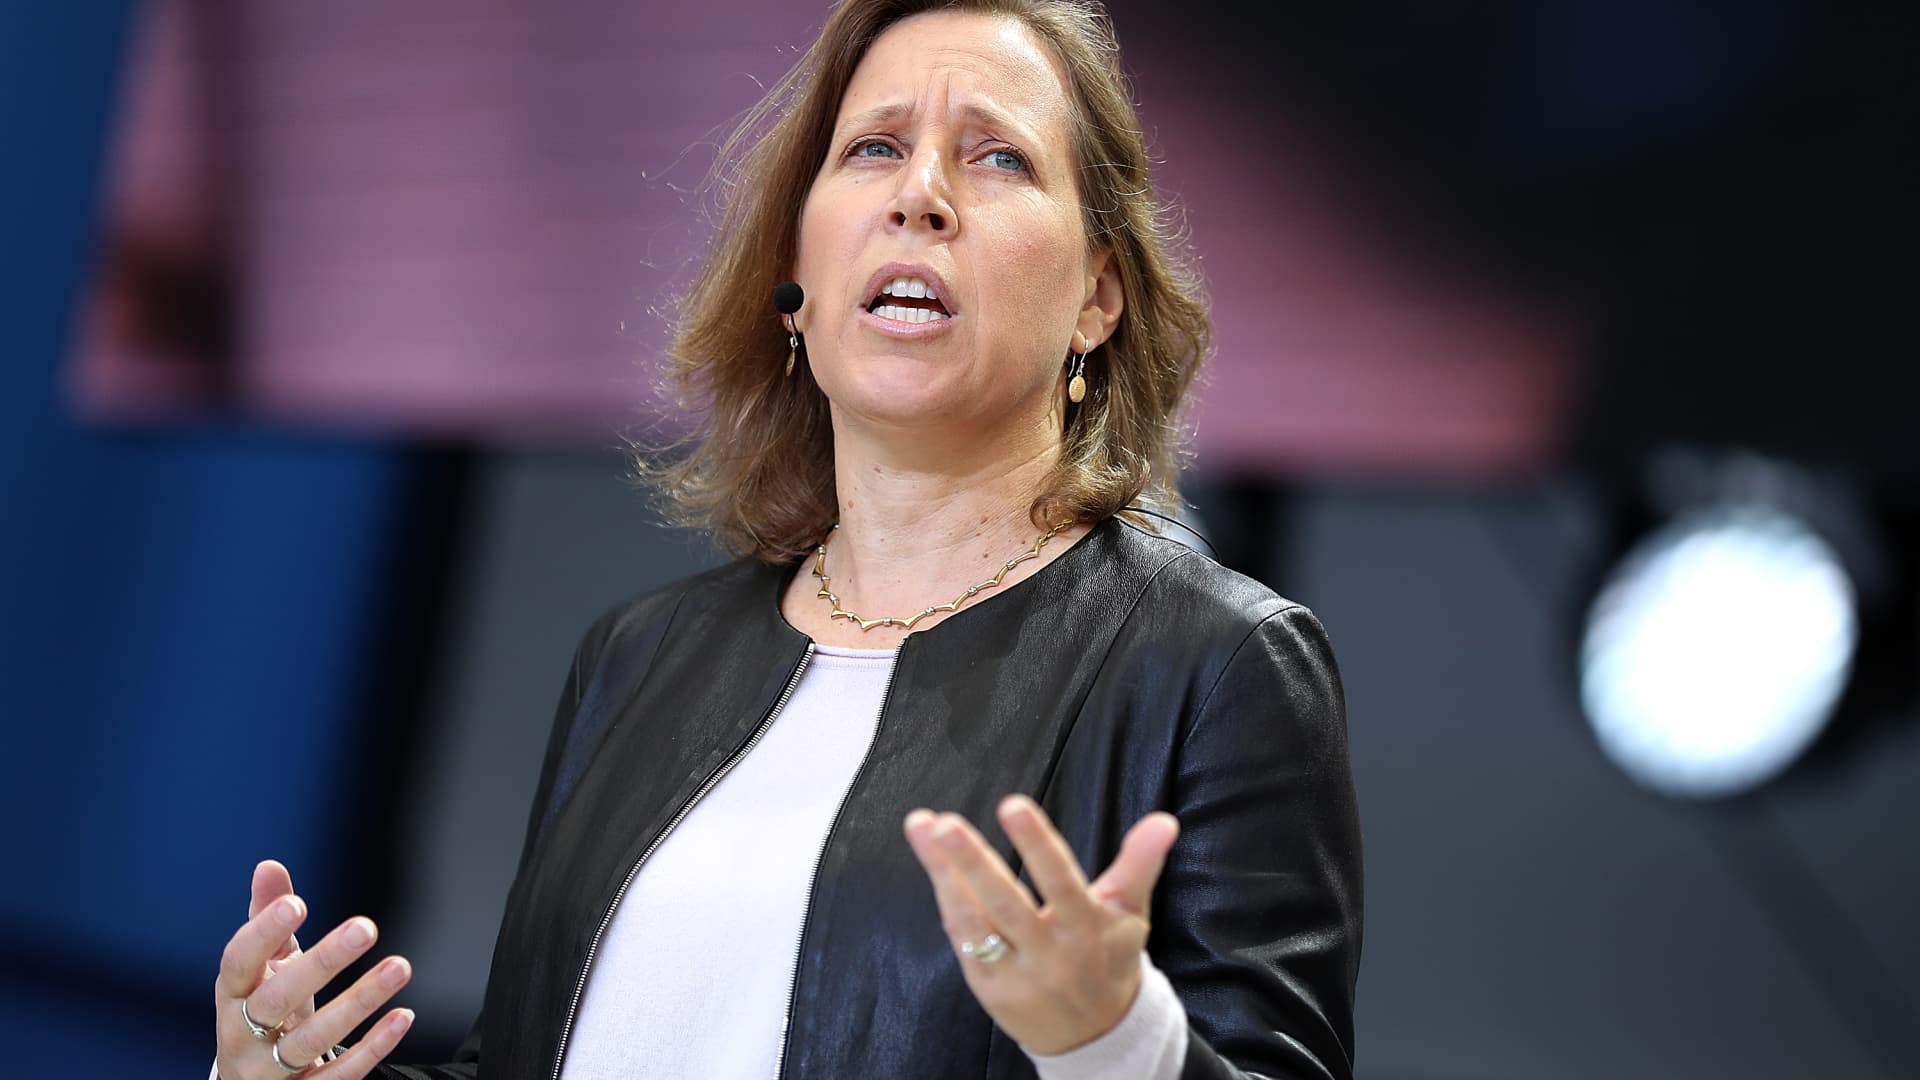 YouTube CEO Susan Wojcicki says she’s stepping down